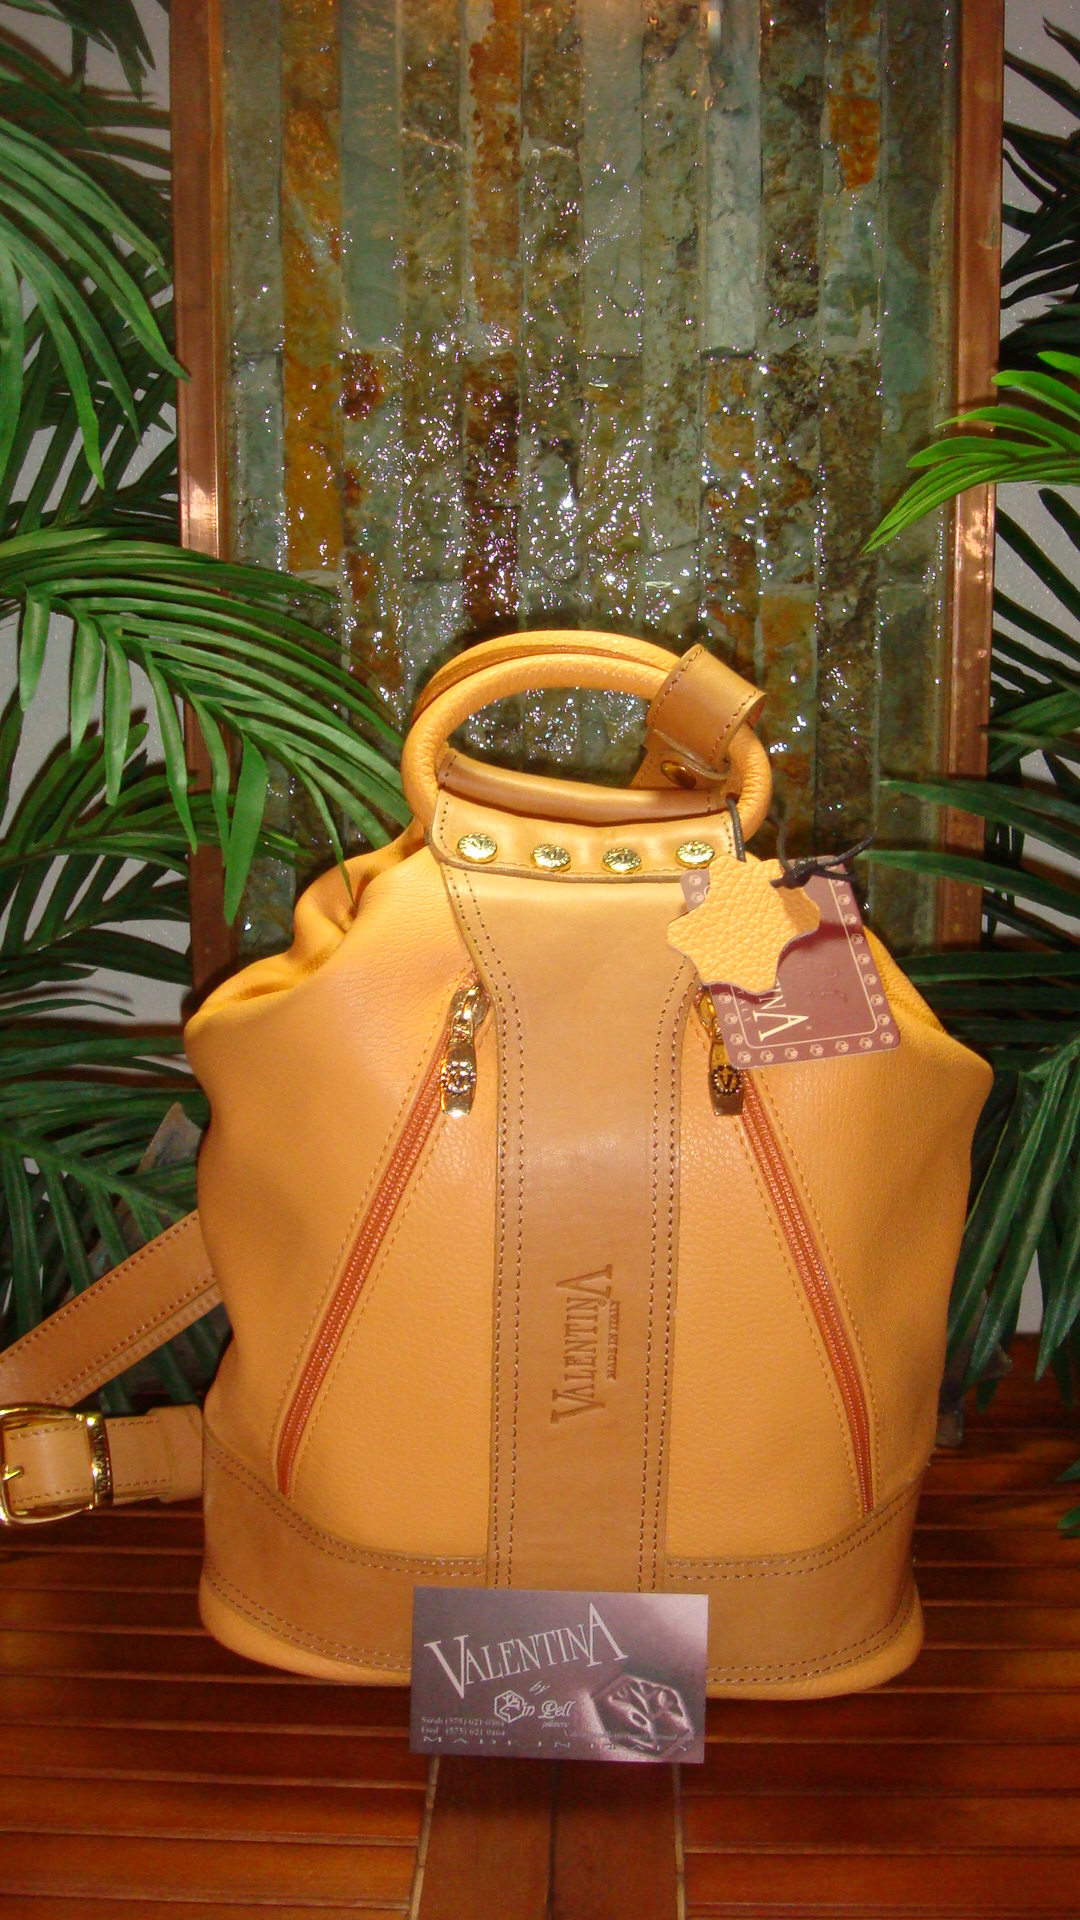 Valentina handbags : Style 901